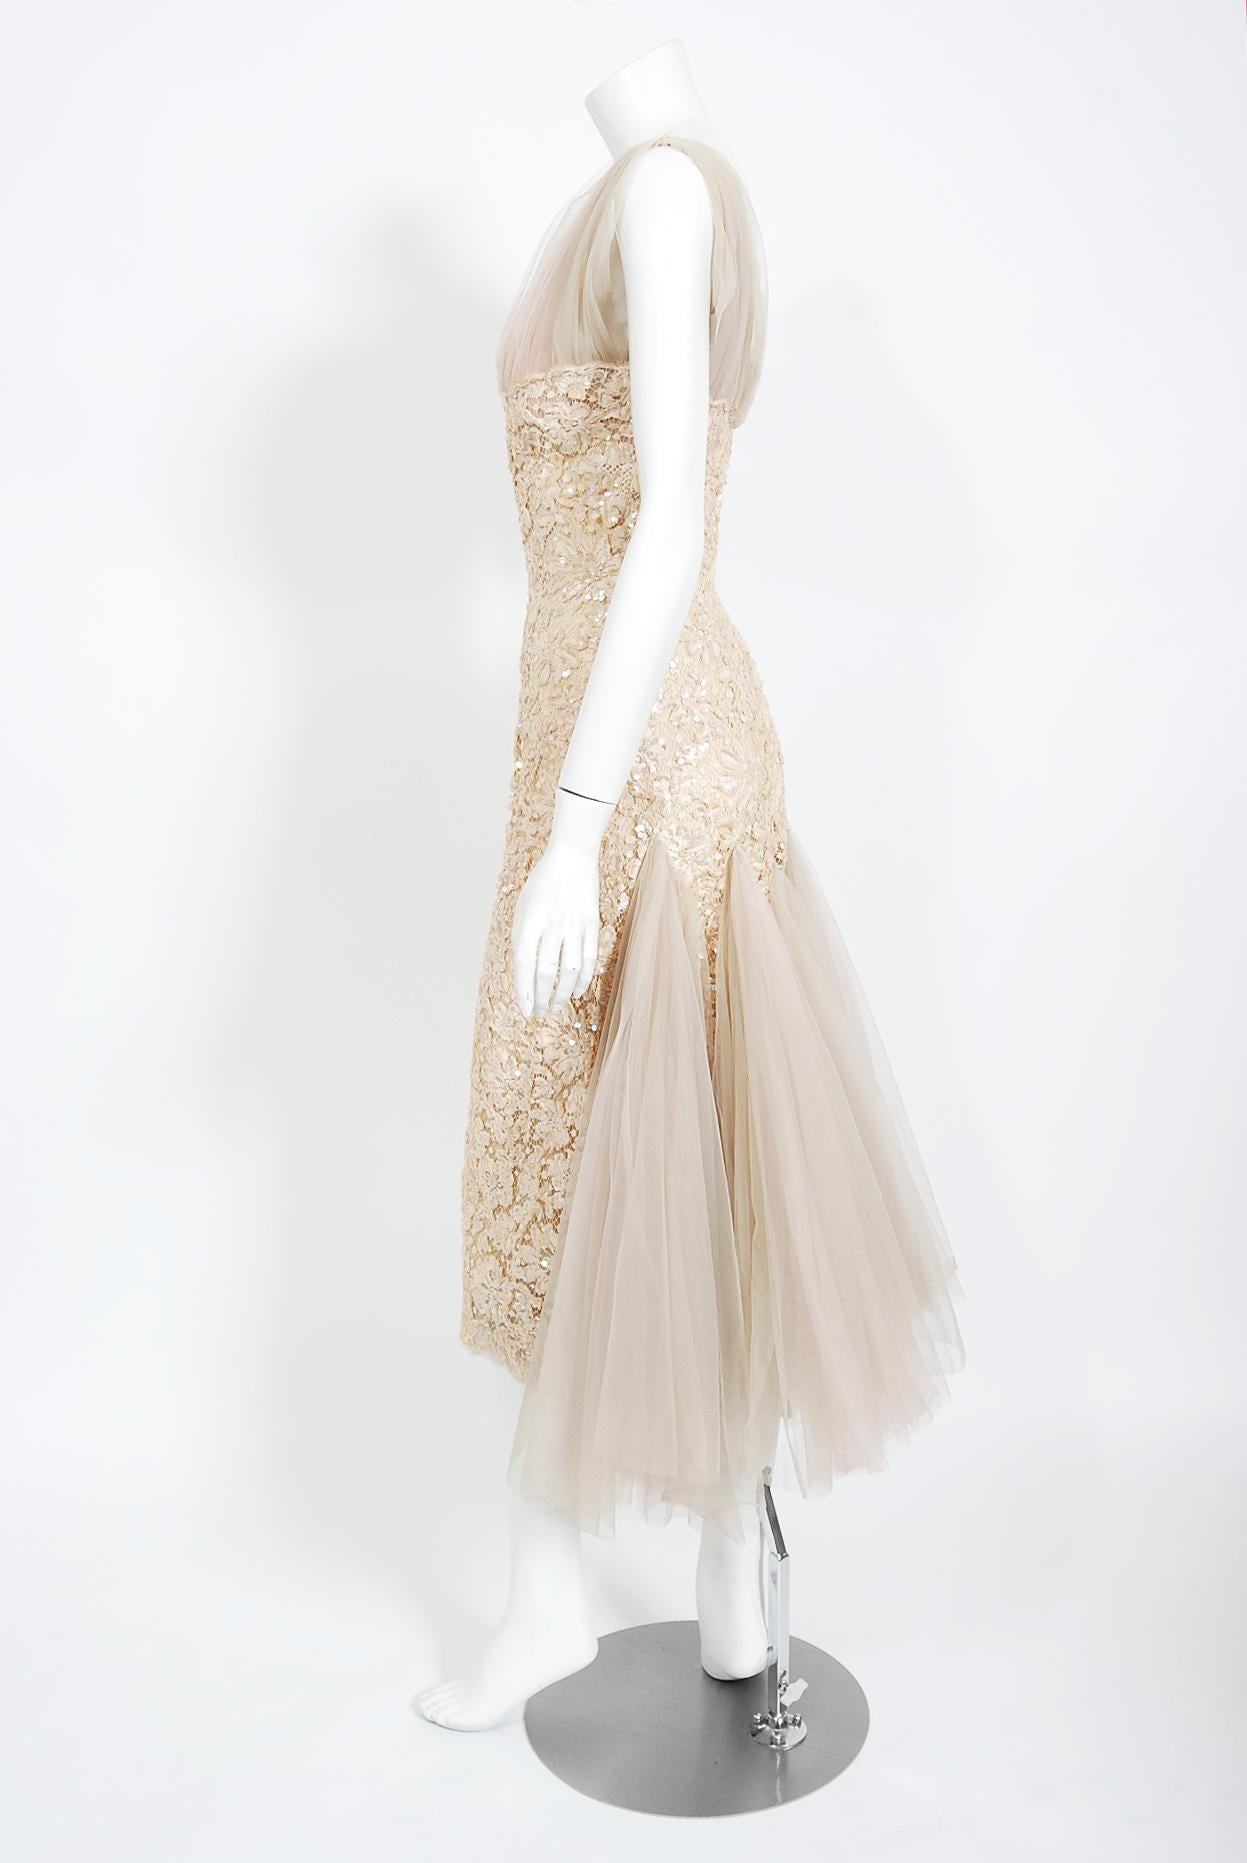 Beige Vintage 1950's Anne Verdi Champagne Sequin Lace & Tulle Bustle Back Bridal Dress For Sale